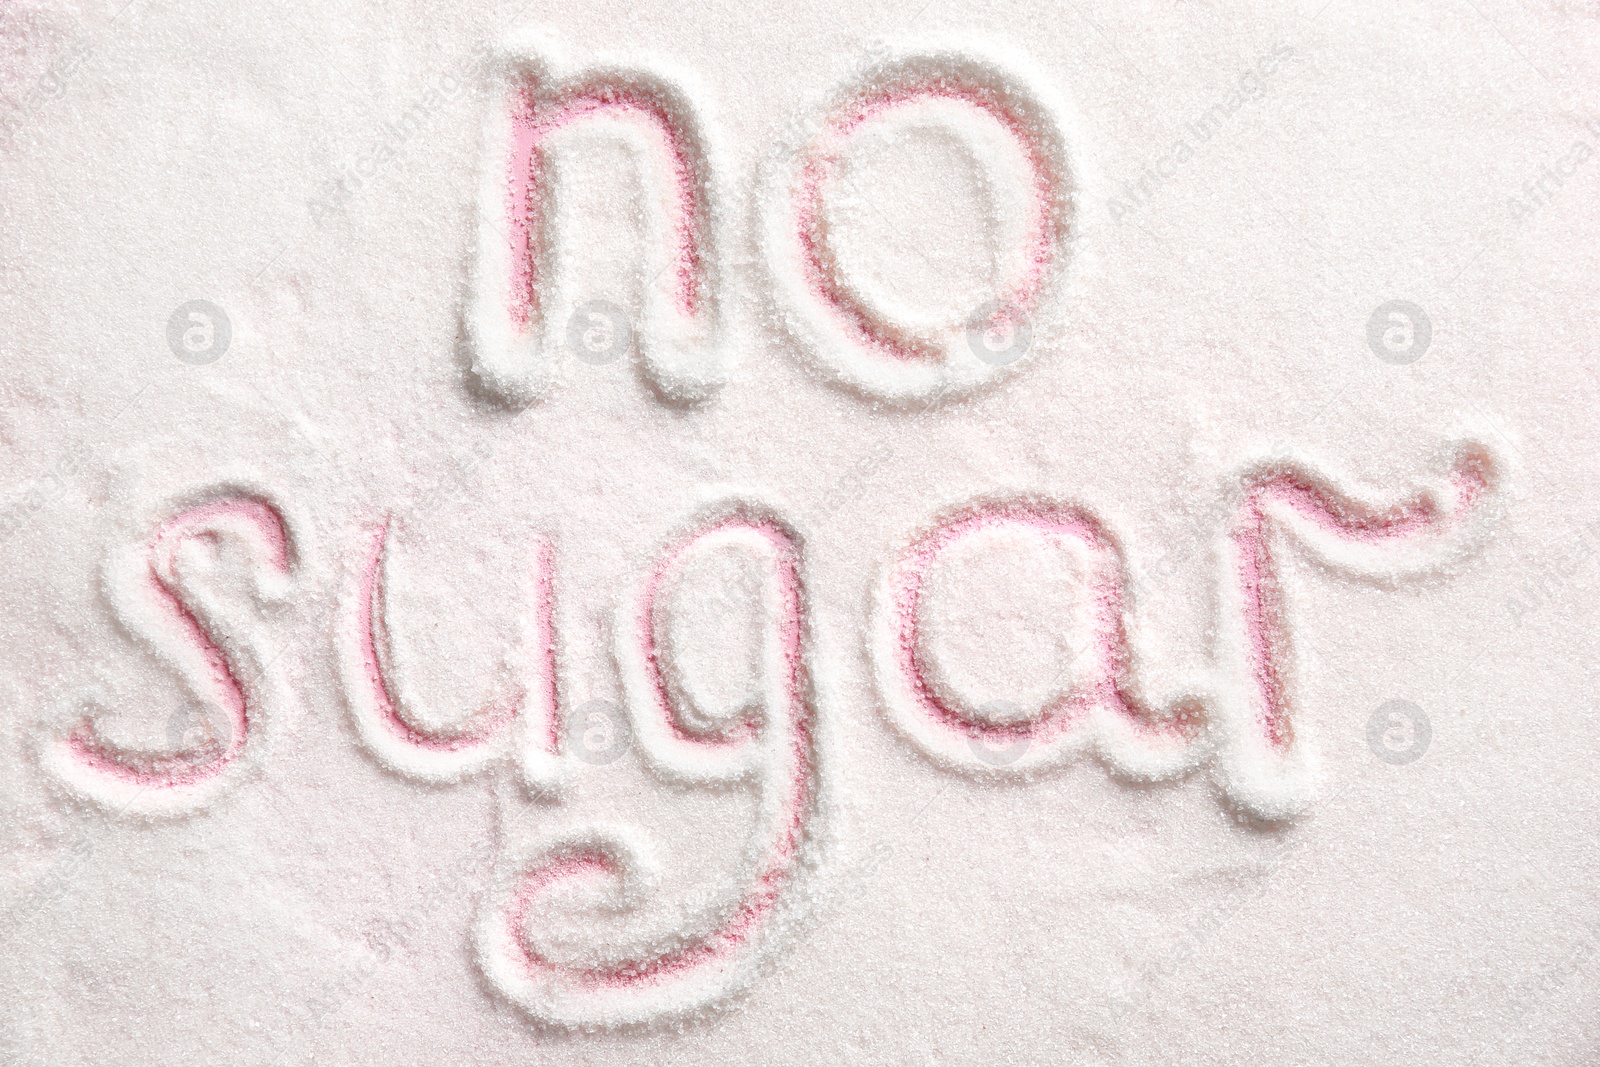 Photo of Phrase NO SUGAR written on sugar sand